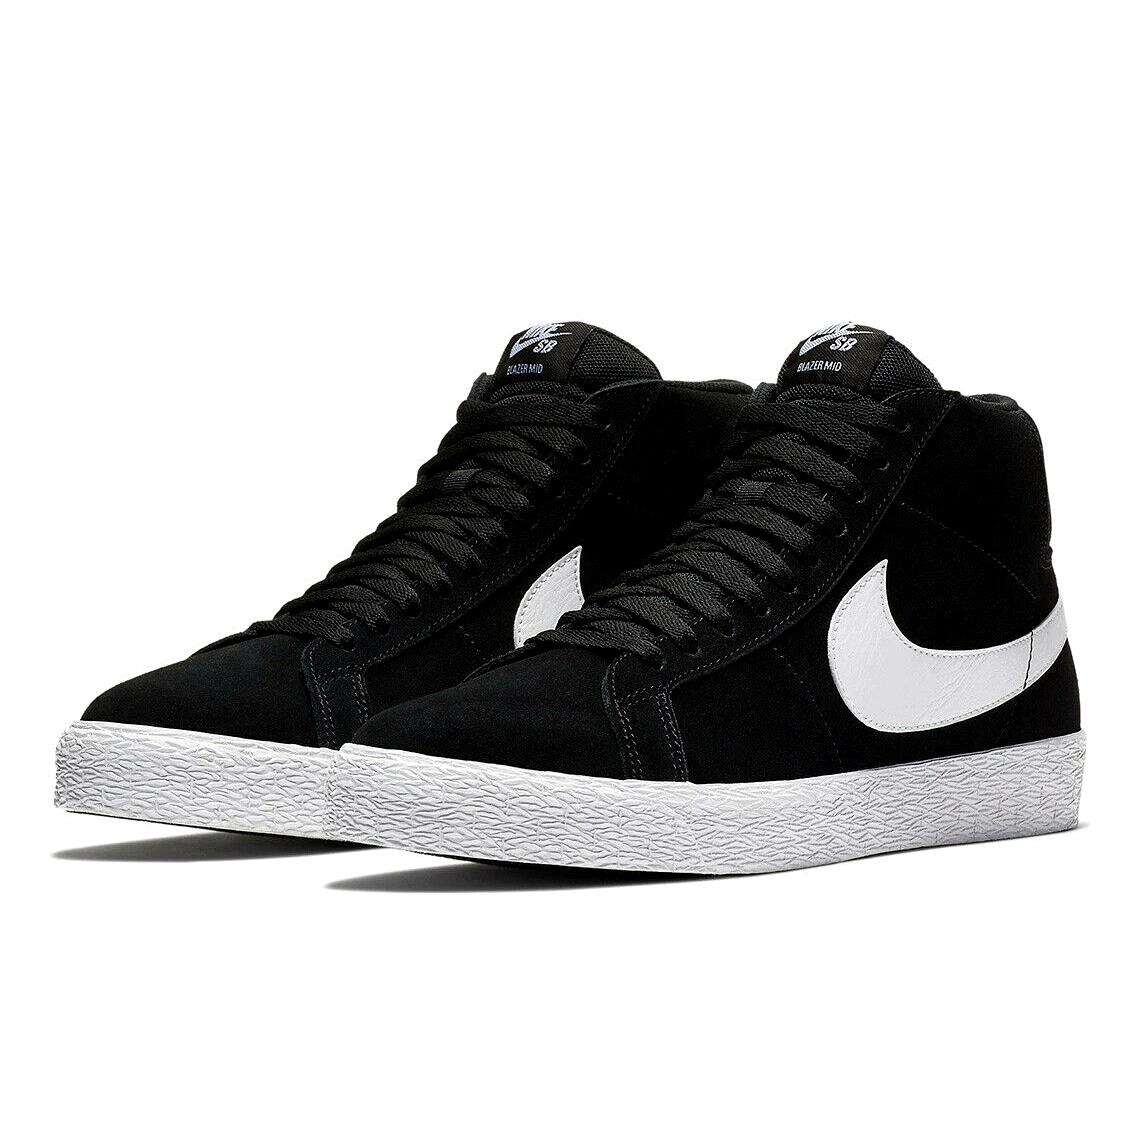 Nike SB Zoom Blazer Mid Mens Size 11.5 Sneaker Shoes 864349 002 Black White - Black